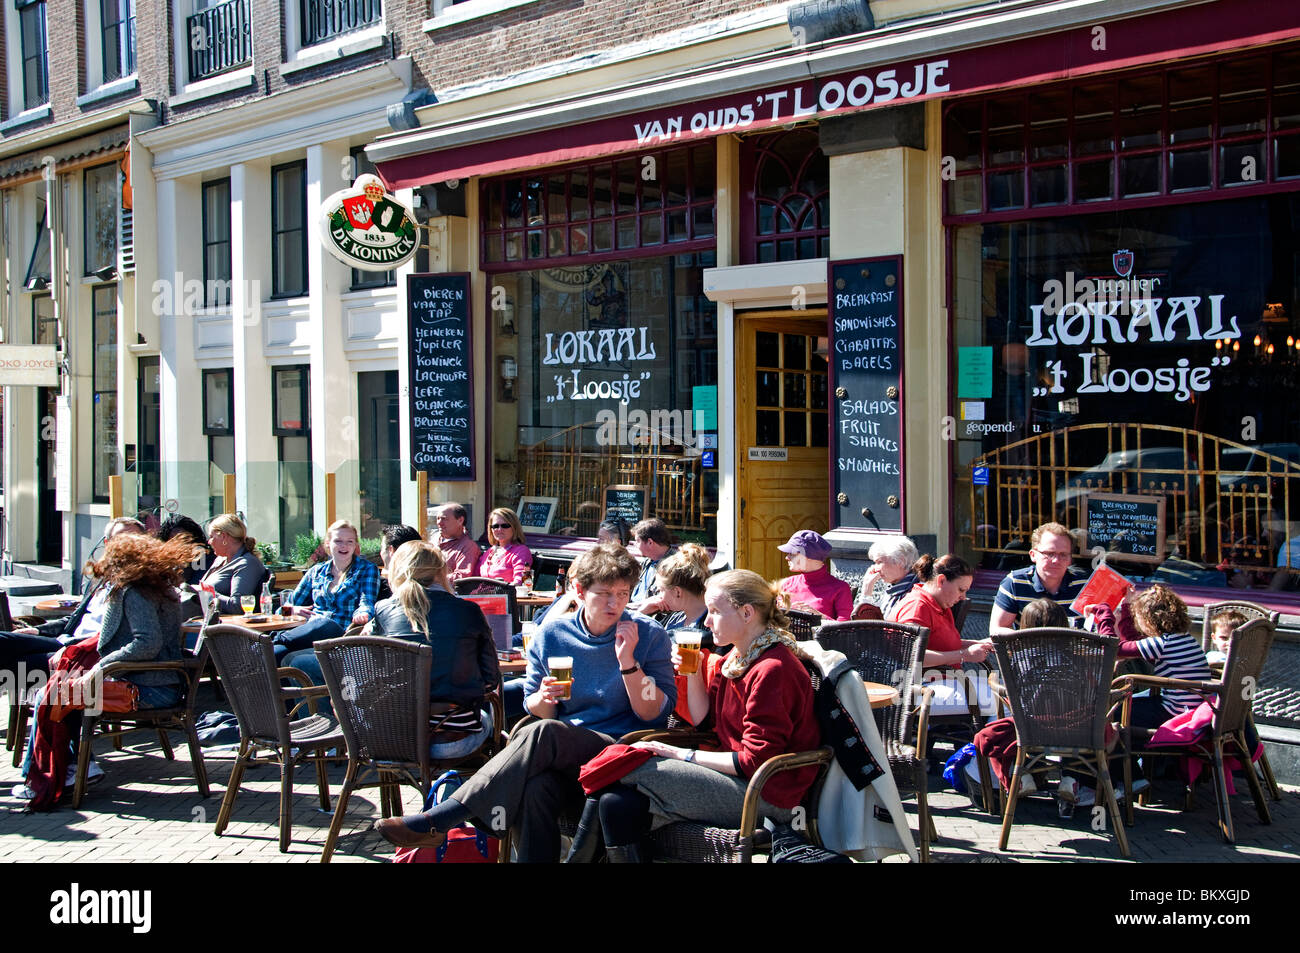 knal drempel haar Lokaal `t Loosje Nieuwmarkt cafe Amsterdam Cafe Restaurant bar pub  Netherlands Stock Photo - Alamy